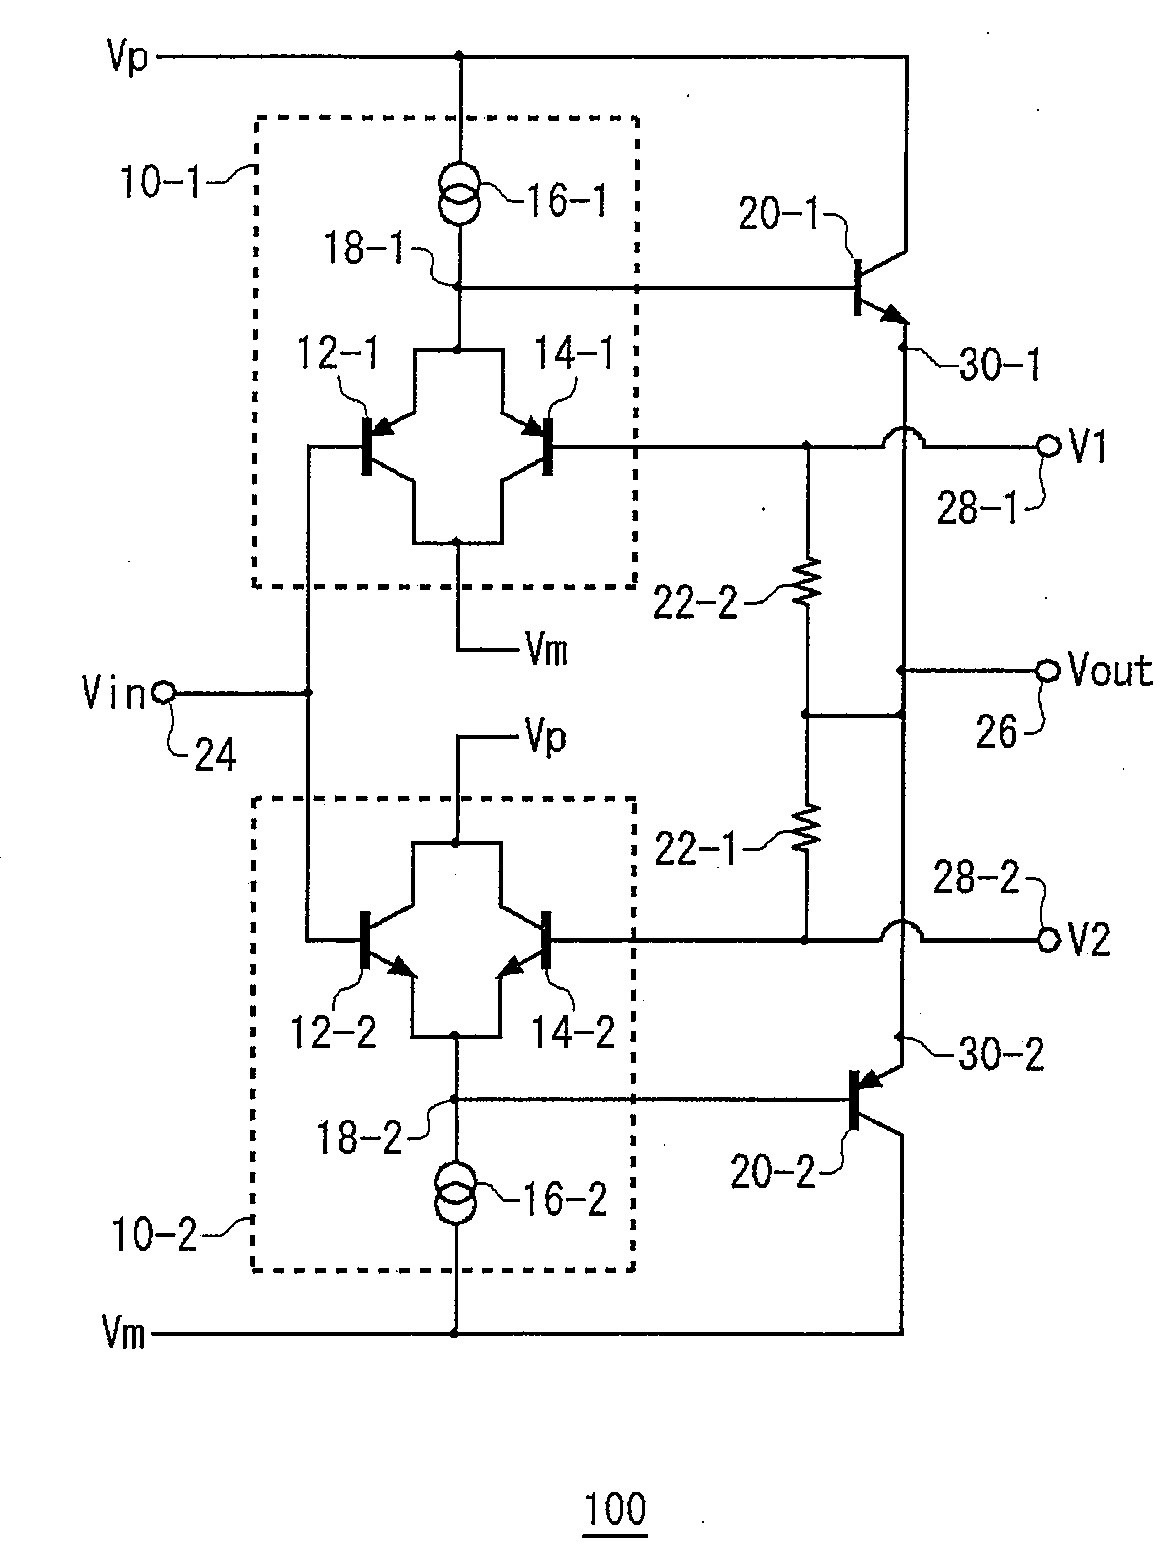 Buffer circuit, amplifier circuit, and test apparatus